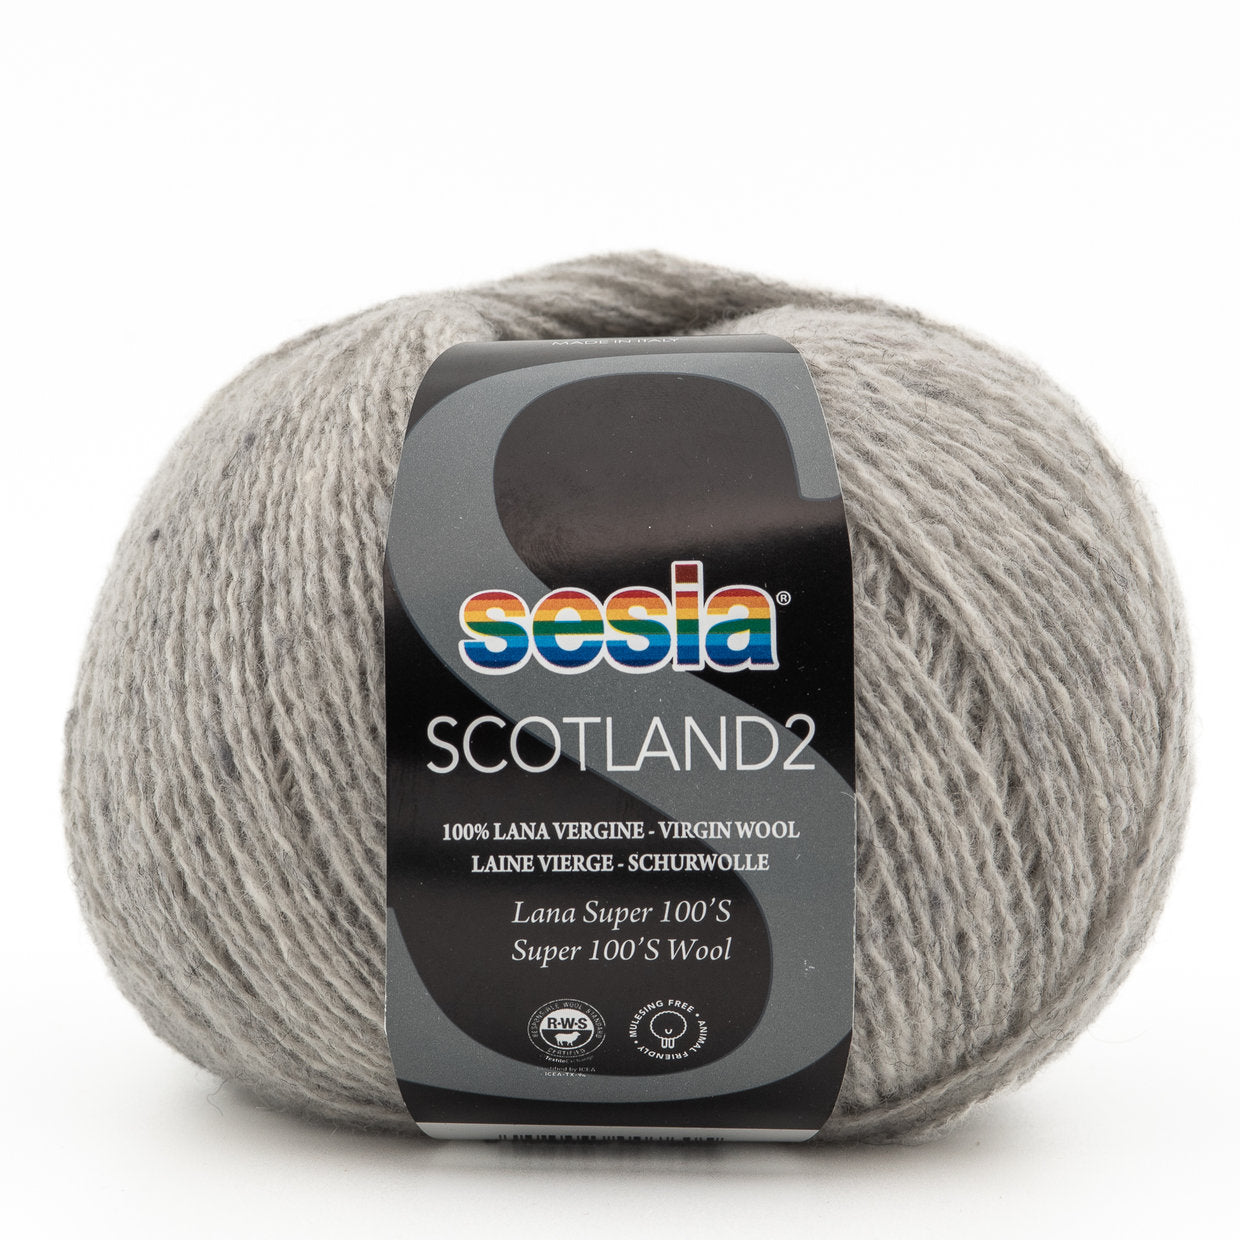 Sesia Scotland2 - 4 ply - 100% wool